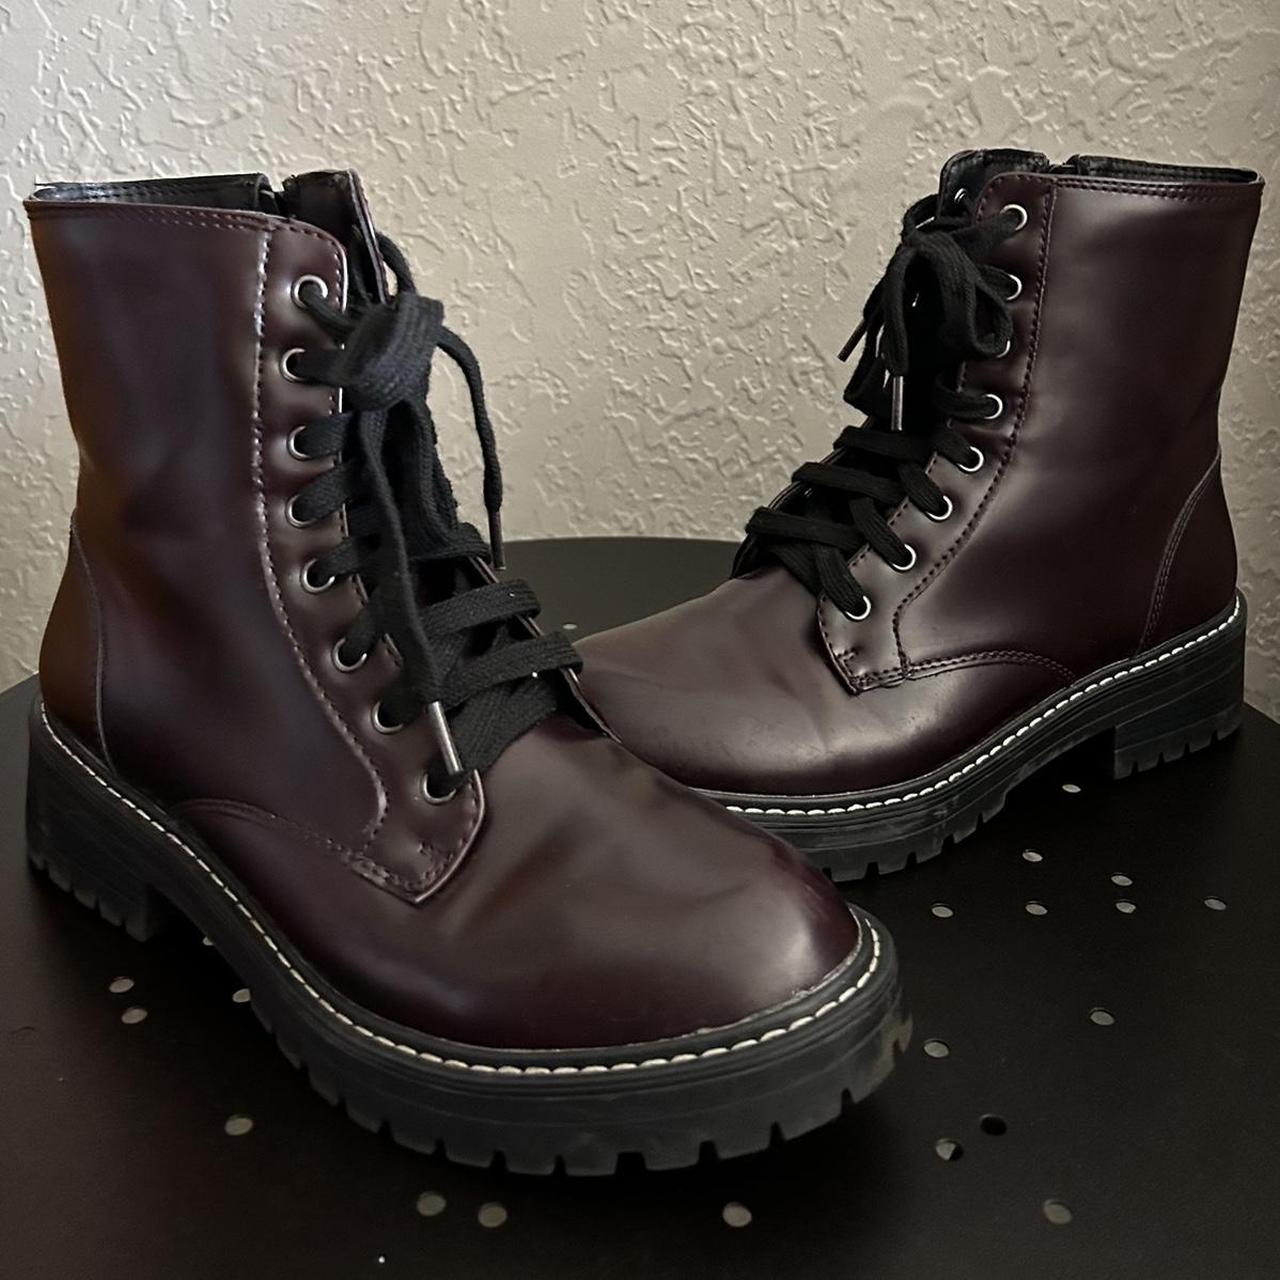 Dark Cherry Combat Boots - Size 9 Medium (regular... - Depop